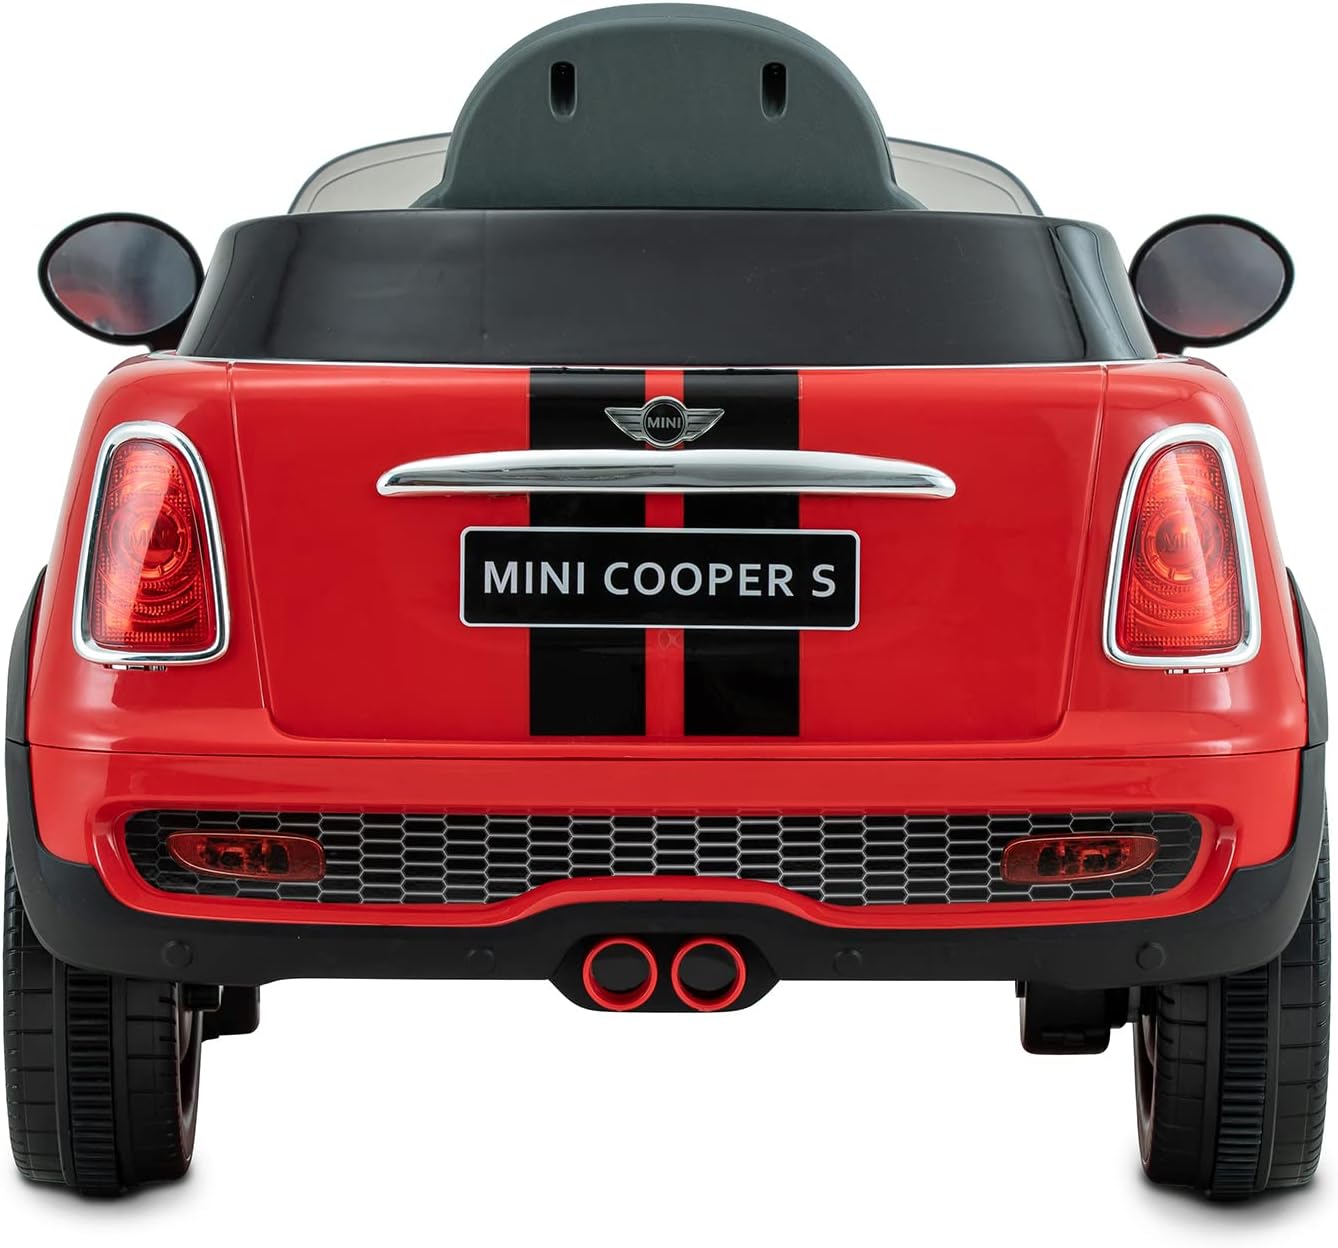 Kinder-Elektroauto "Mini Cooper S 6V" von Rollplay